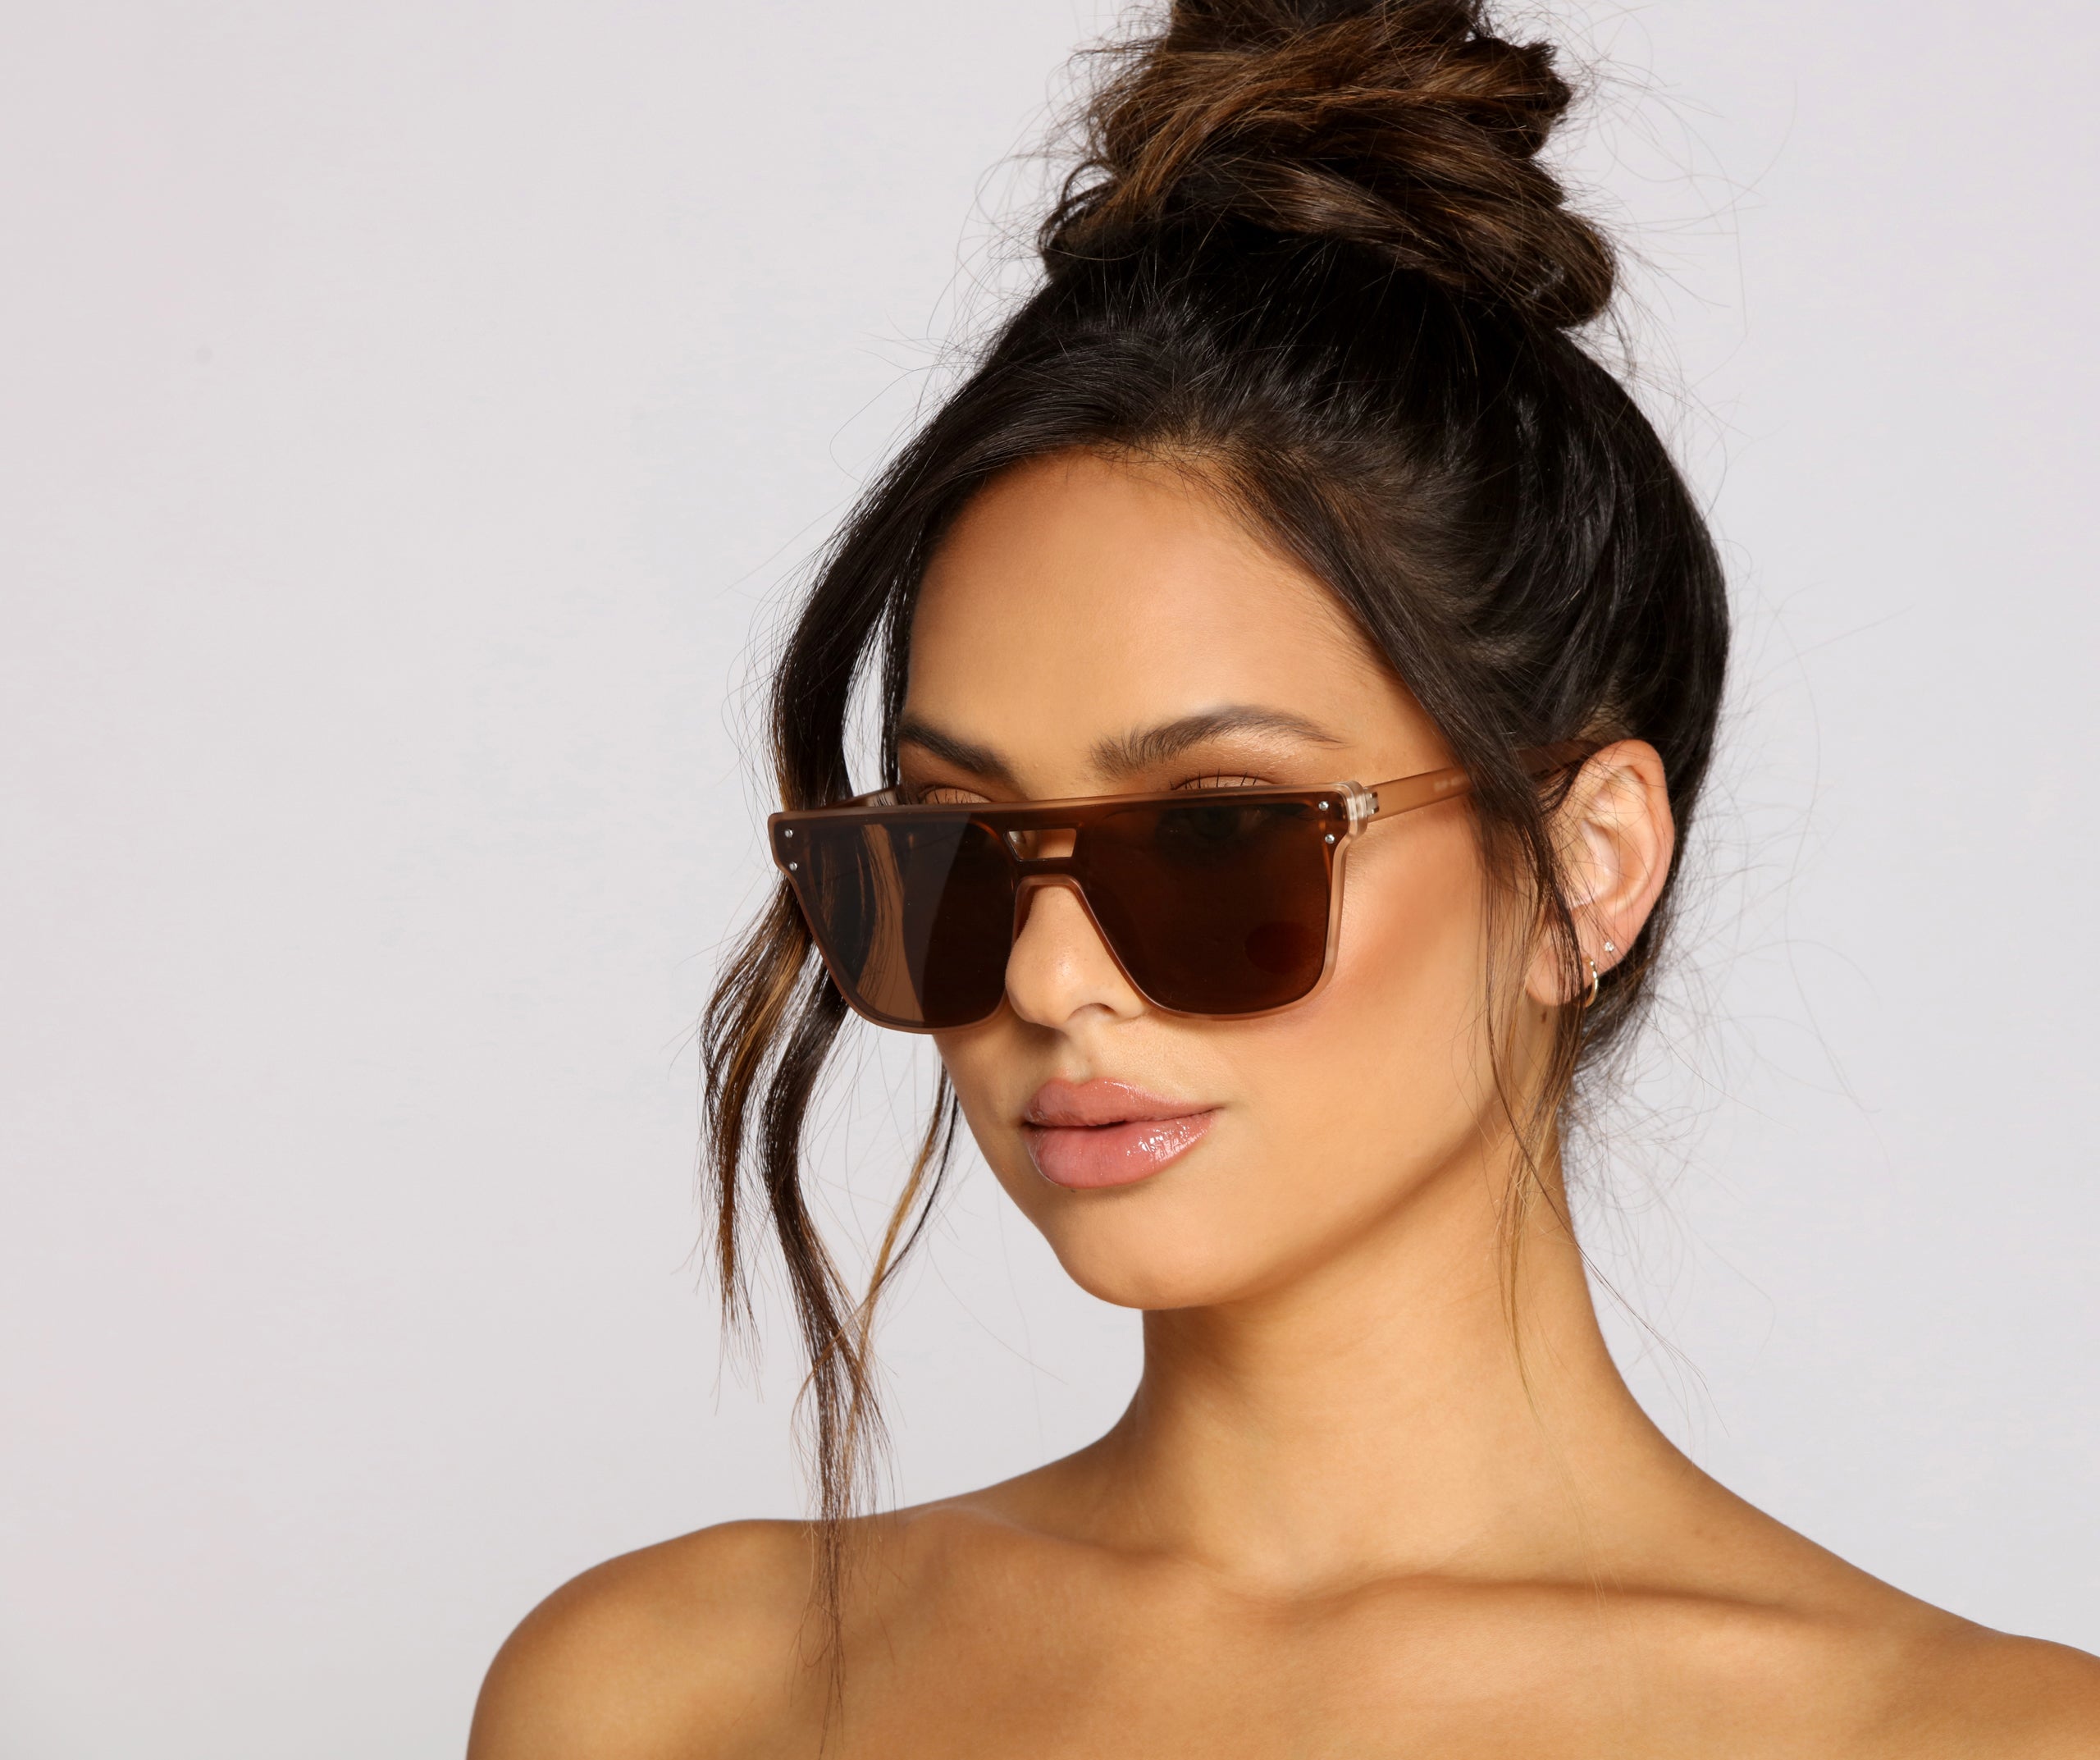 Stylishly Studded Flat-Top Sunglasses